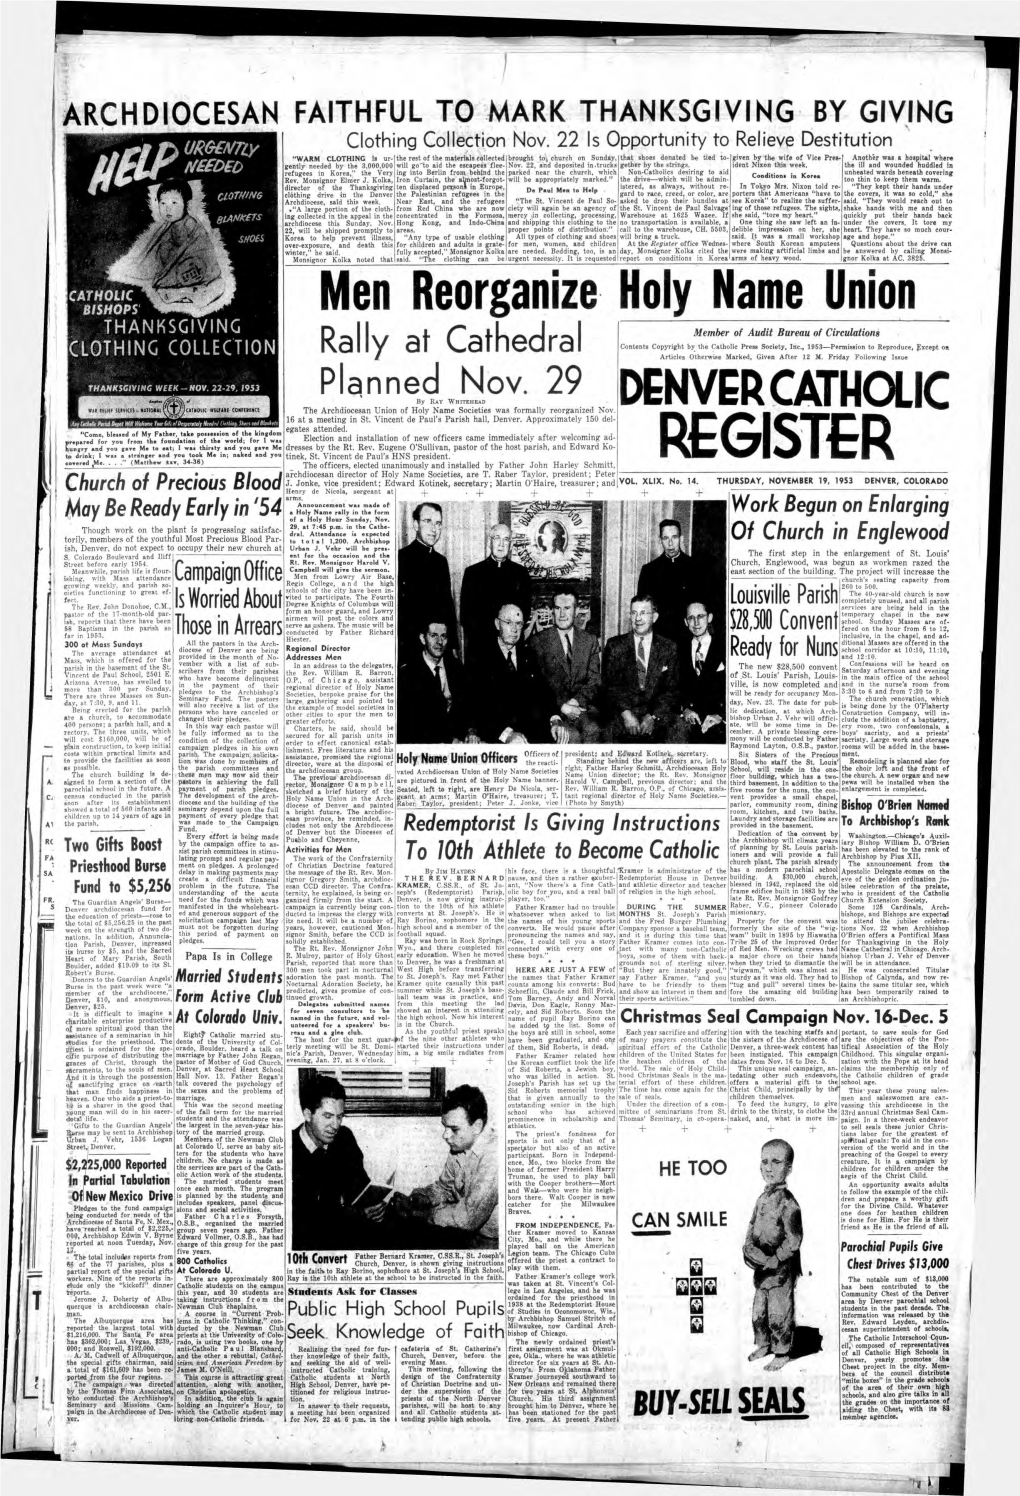 Men Reorganize Holy Name Union DENVER Cathaic REGISTER